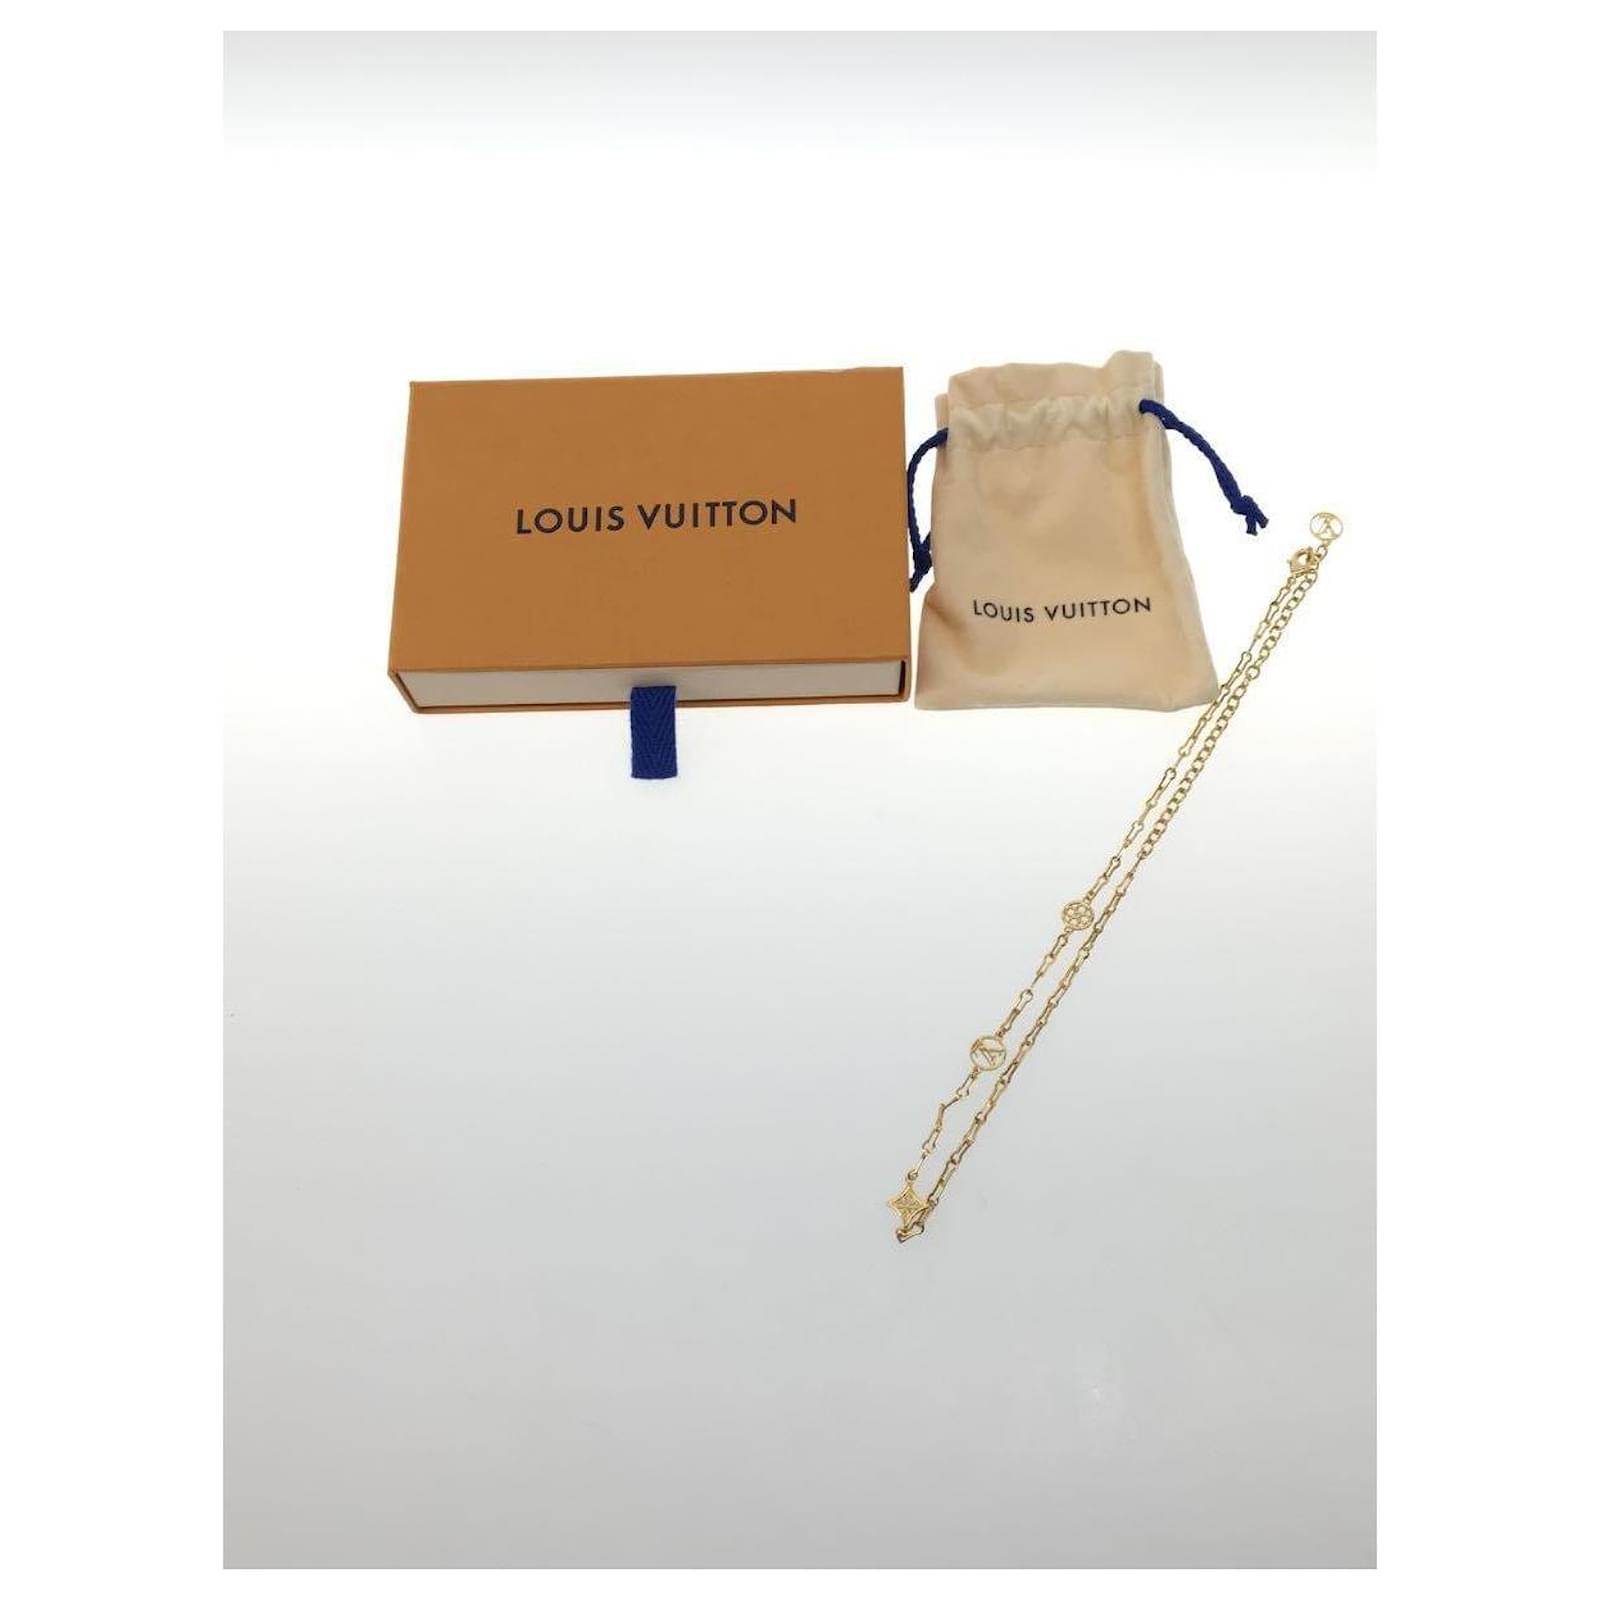 Louis Vuitton Collana M69622 CHOKER FOREVER YOUNG